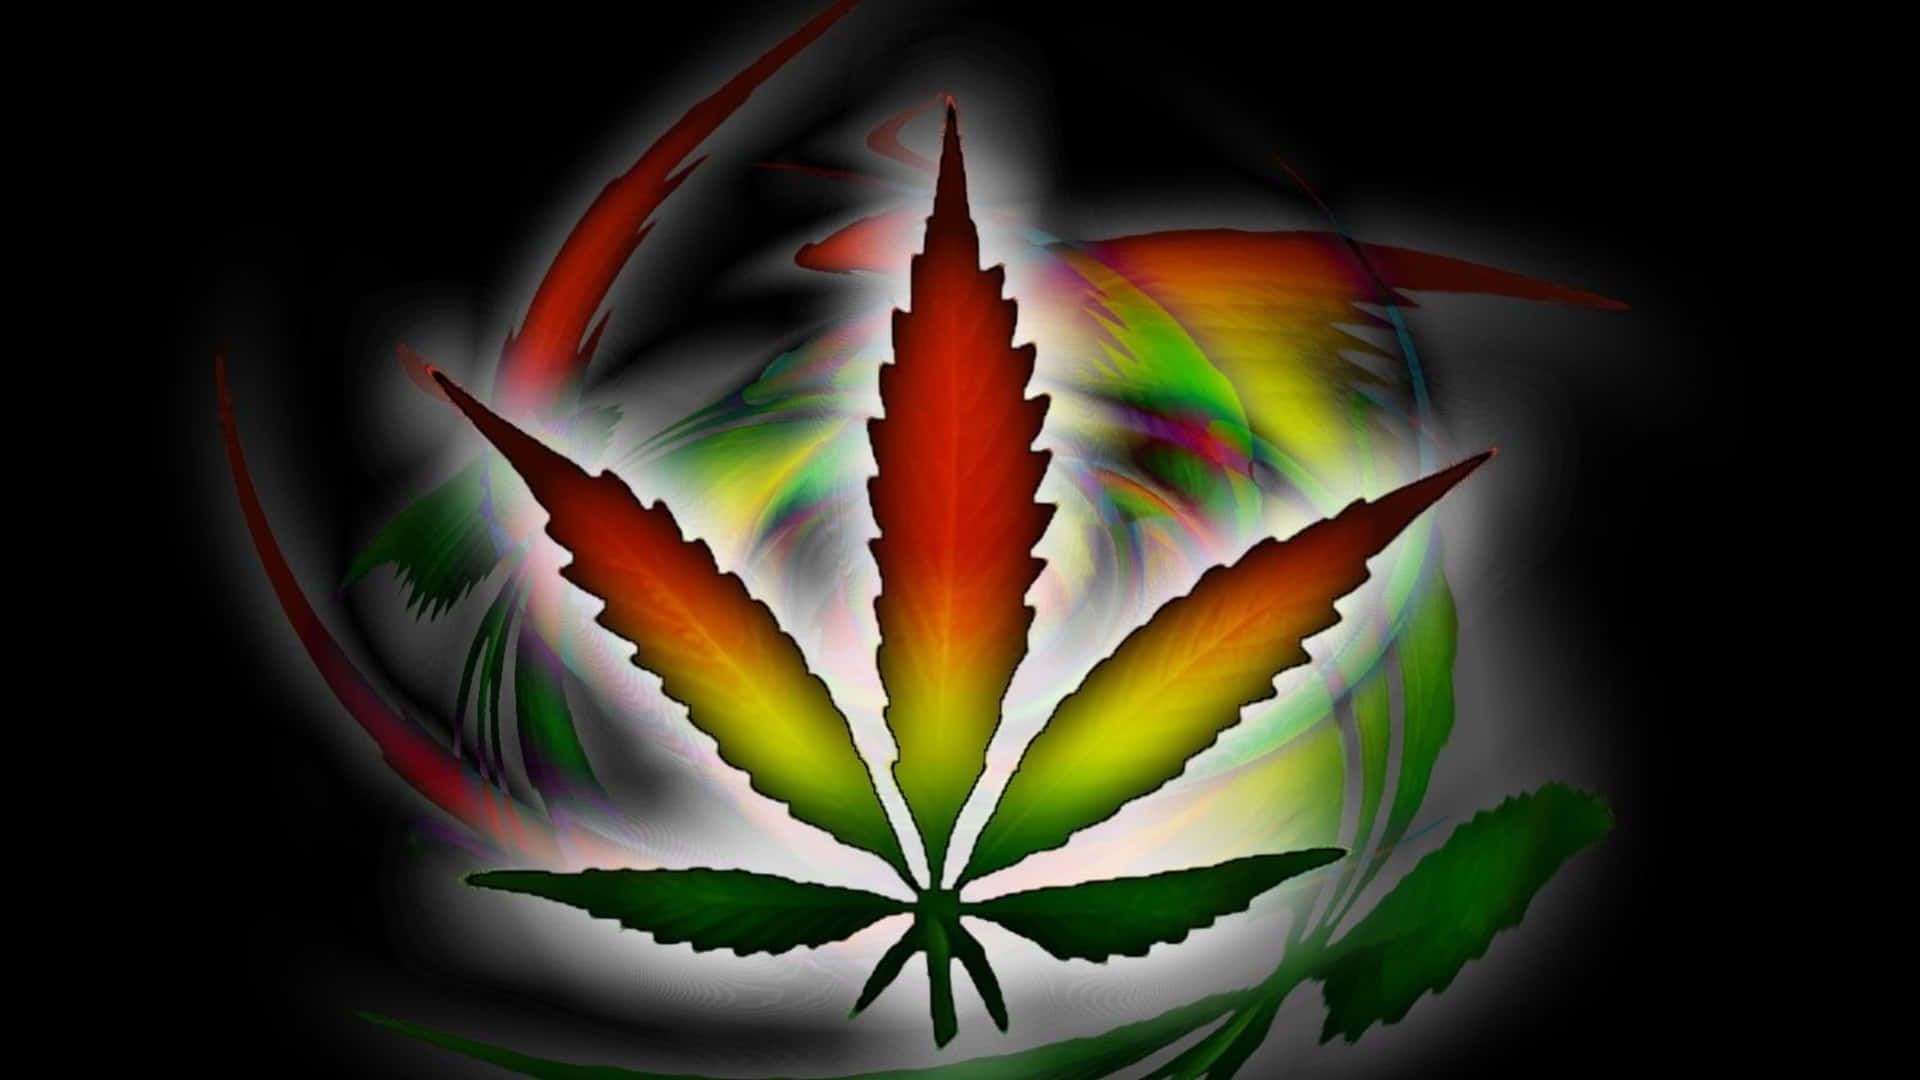 "The healing power of Cannabis" Wallpaper